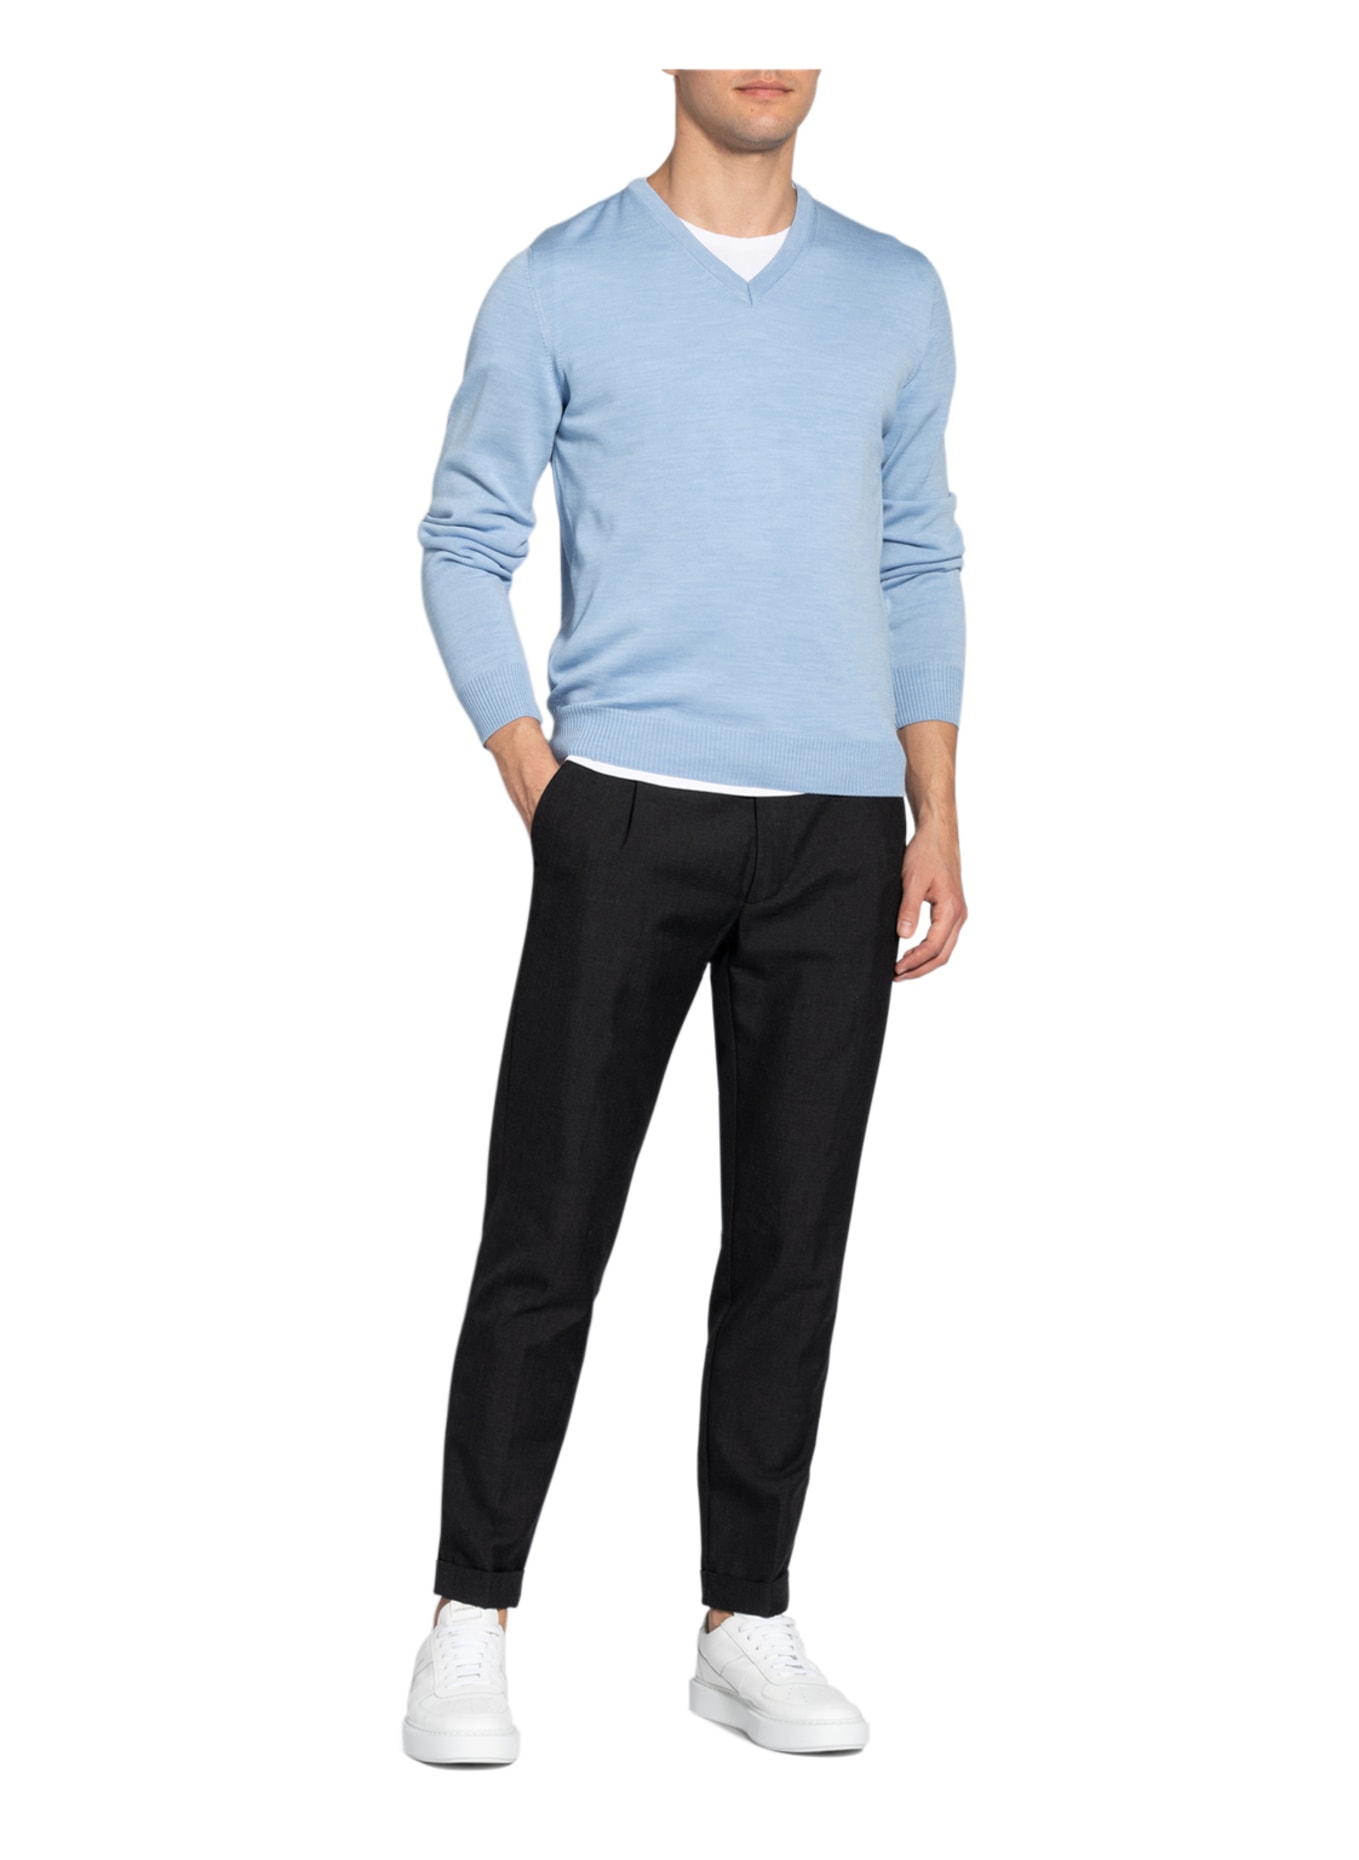 MAERZ MUENCHEN Pullover, Farbe: HELLBLAU (Bild 2)